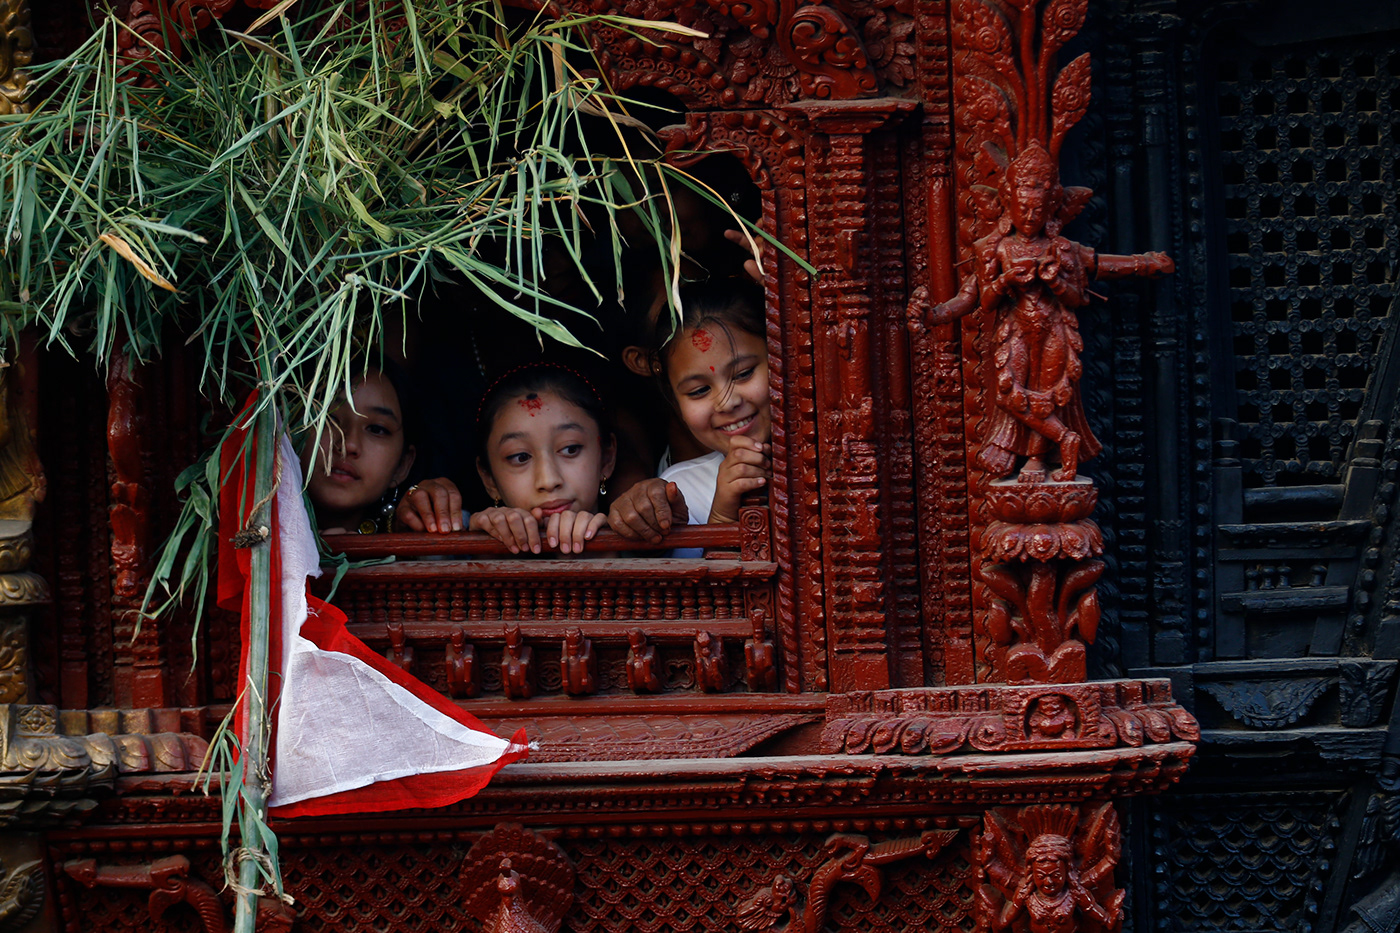 nepal kathmandu asia festival culture indrajatra deity livinggoddess kumari celebrate